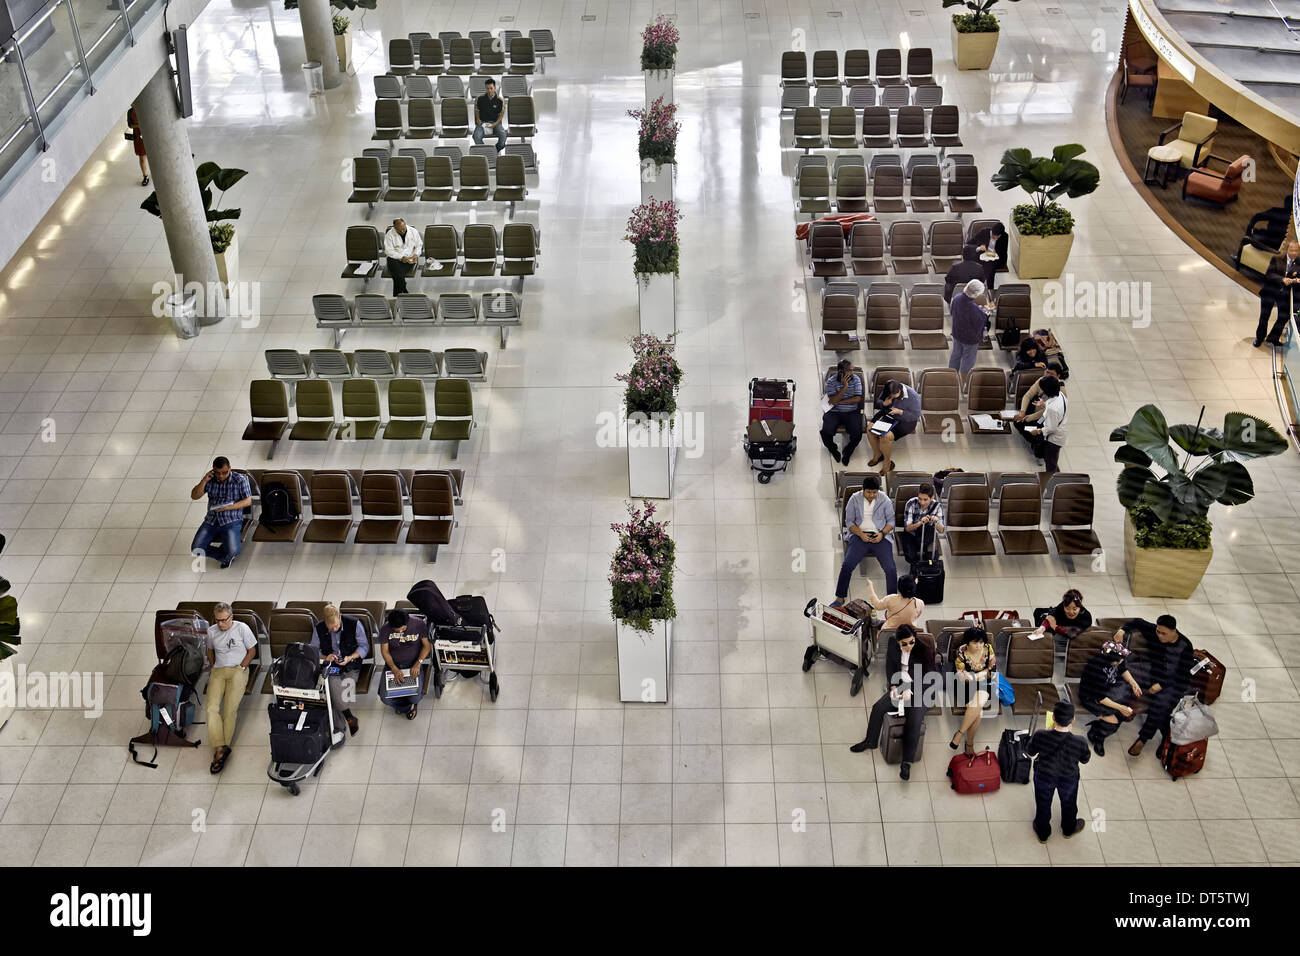 Passenger lounge and waiting area at Suvarnabhumi airport Bangkok Thailand S. E. Asia Stock Photo